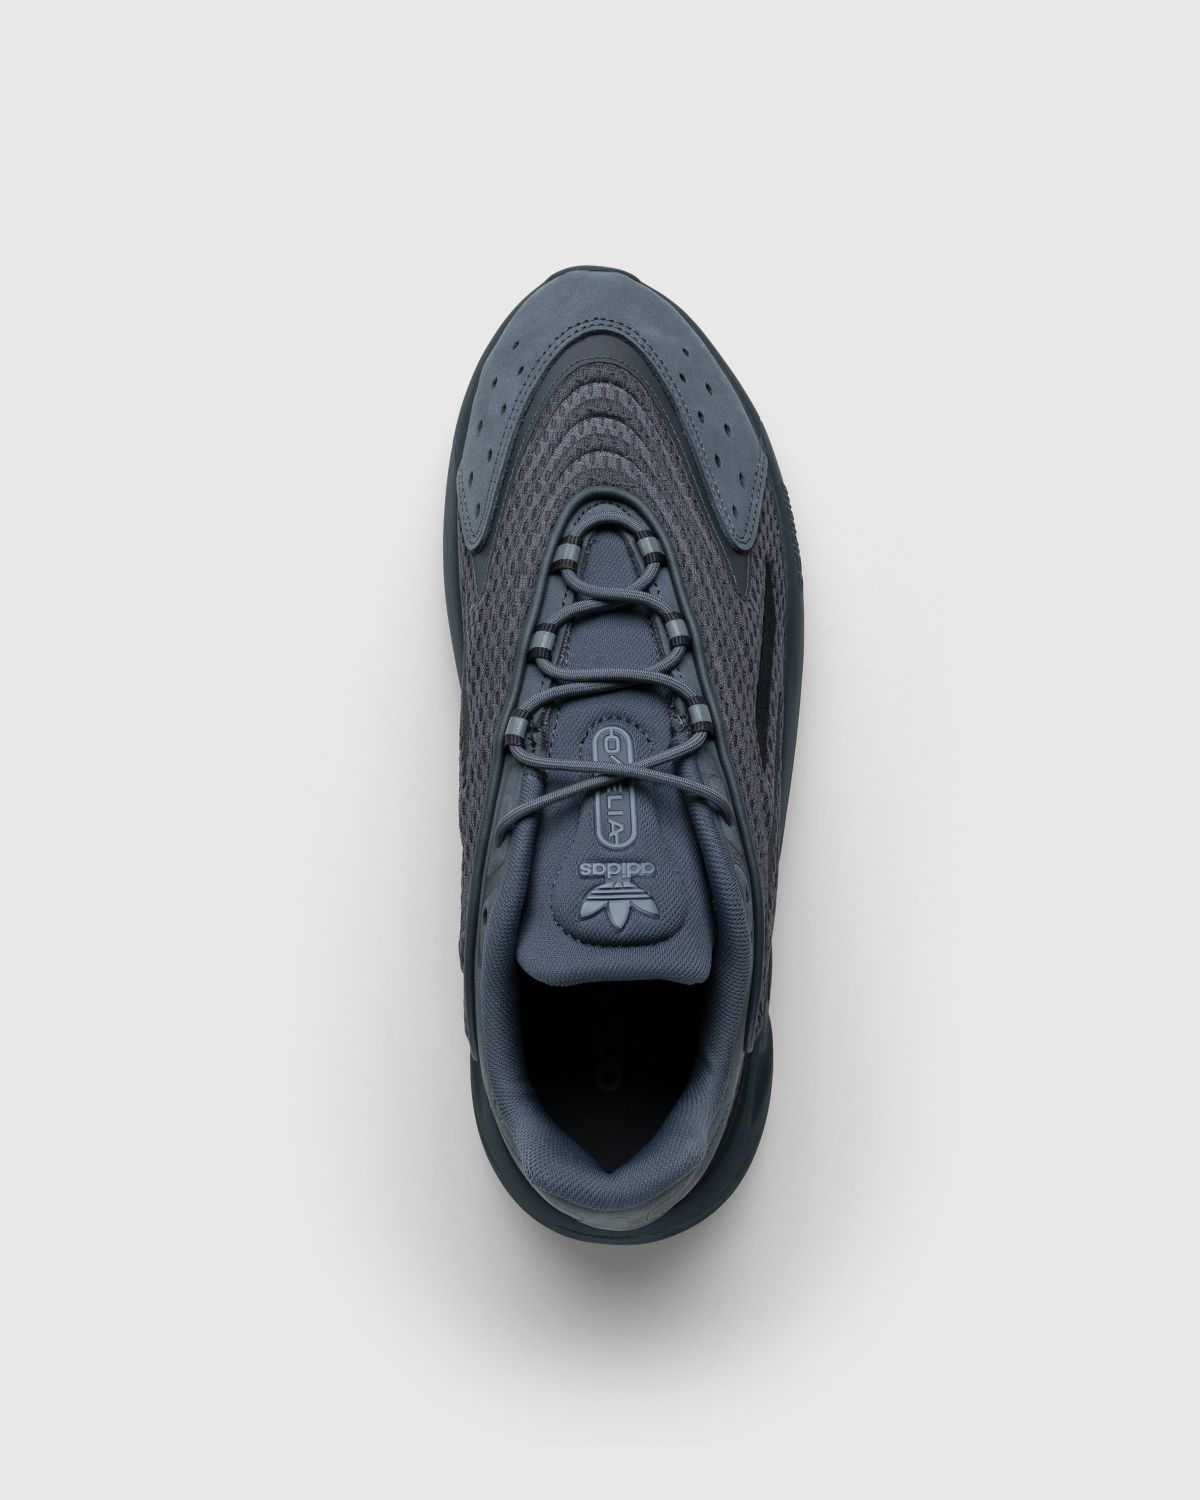 Adidas – Ozelia Grey/Carbon - Low Top Sneakers - Black - Image 5